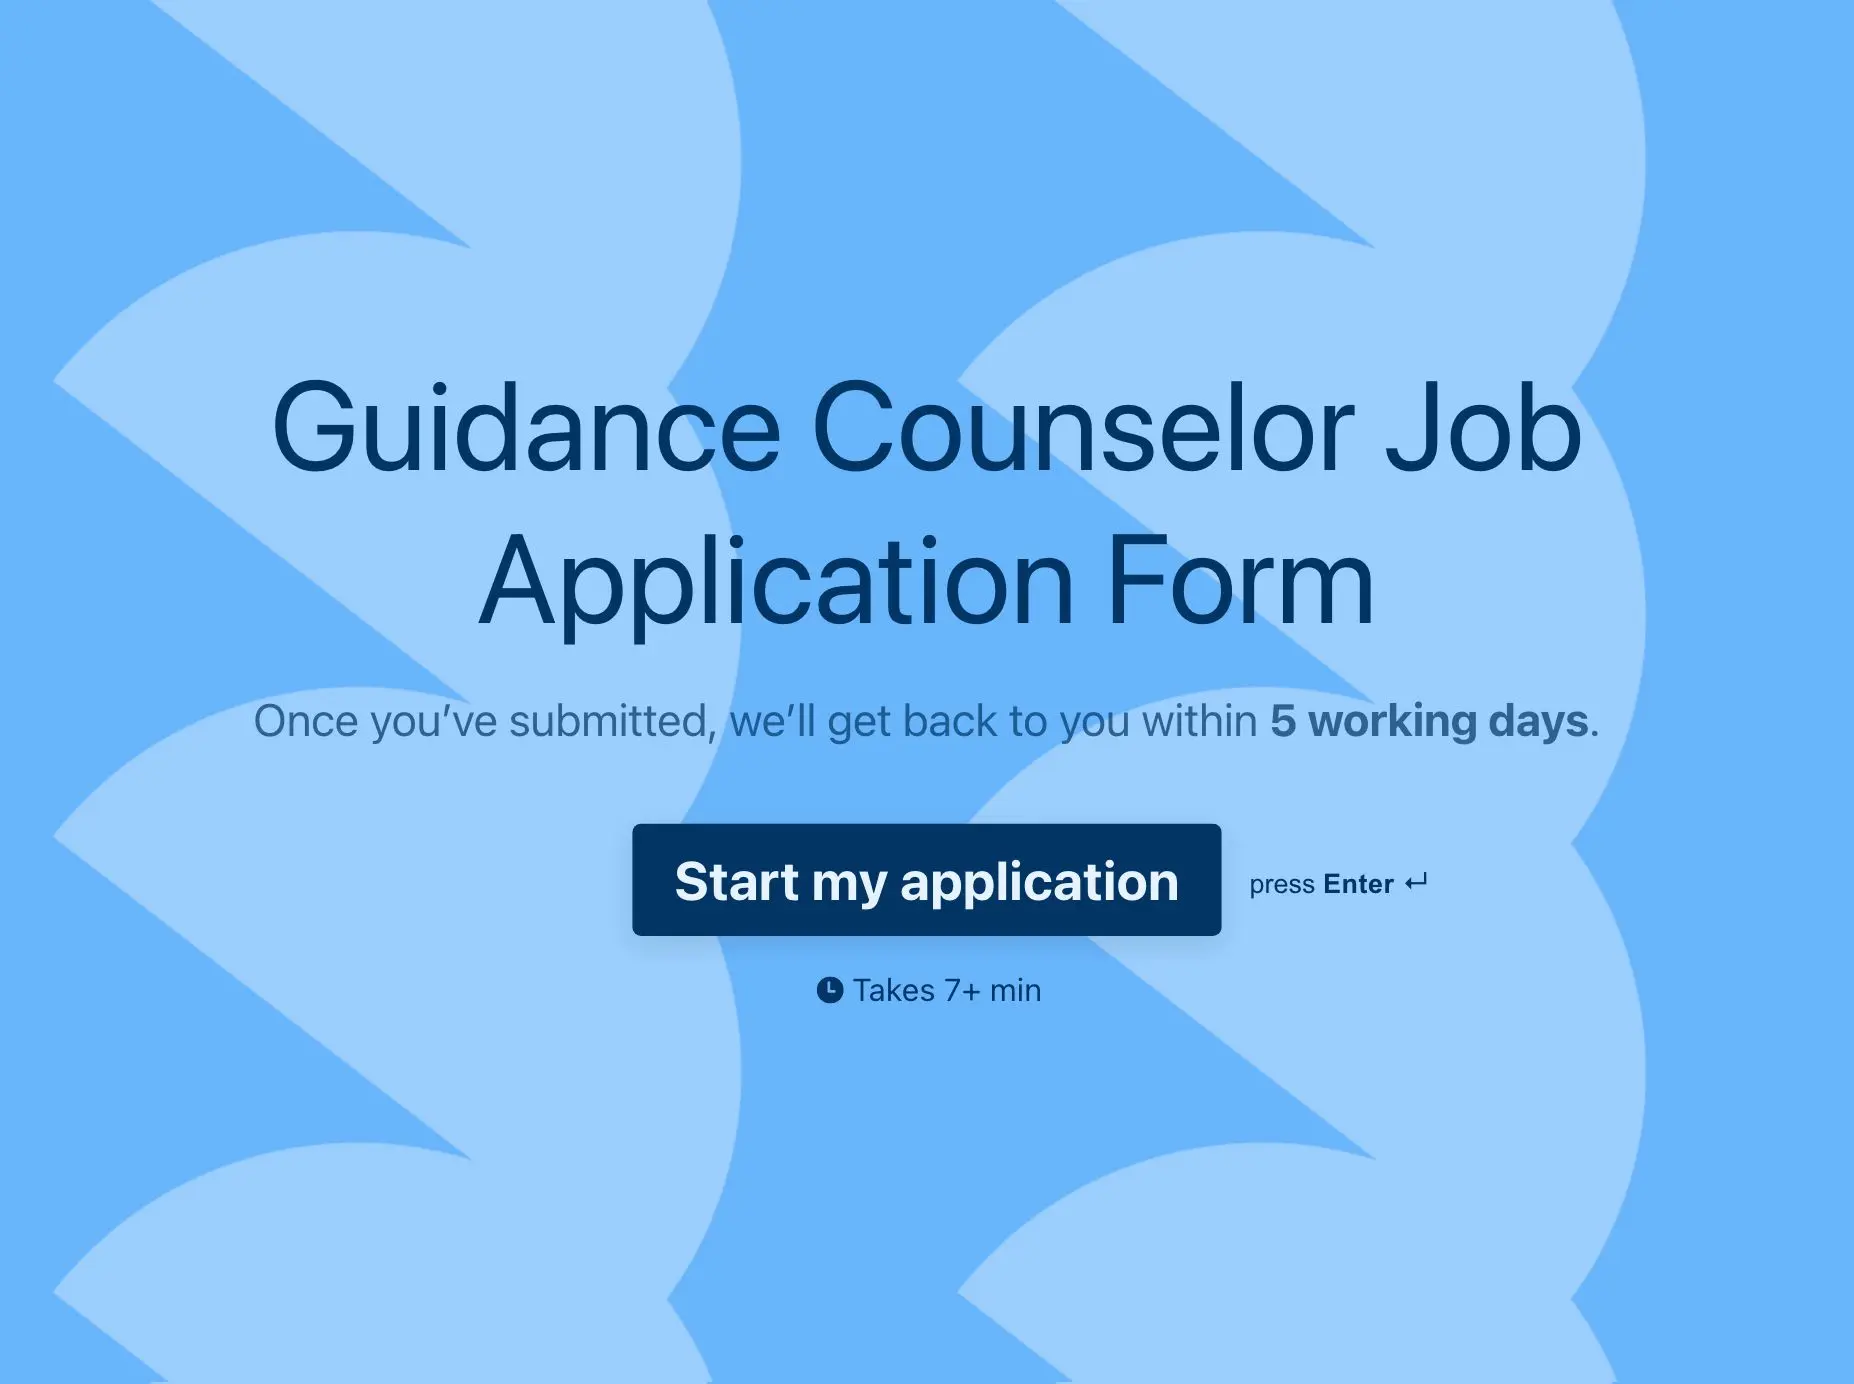 Guidance Counselor Job Application Form Template Hero